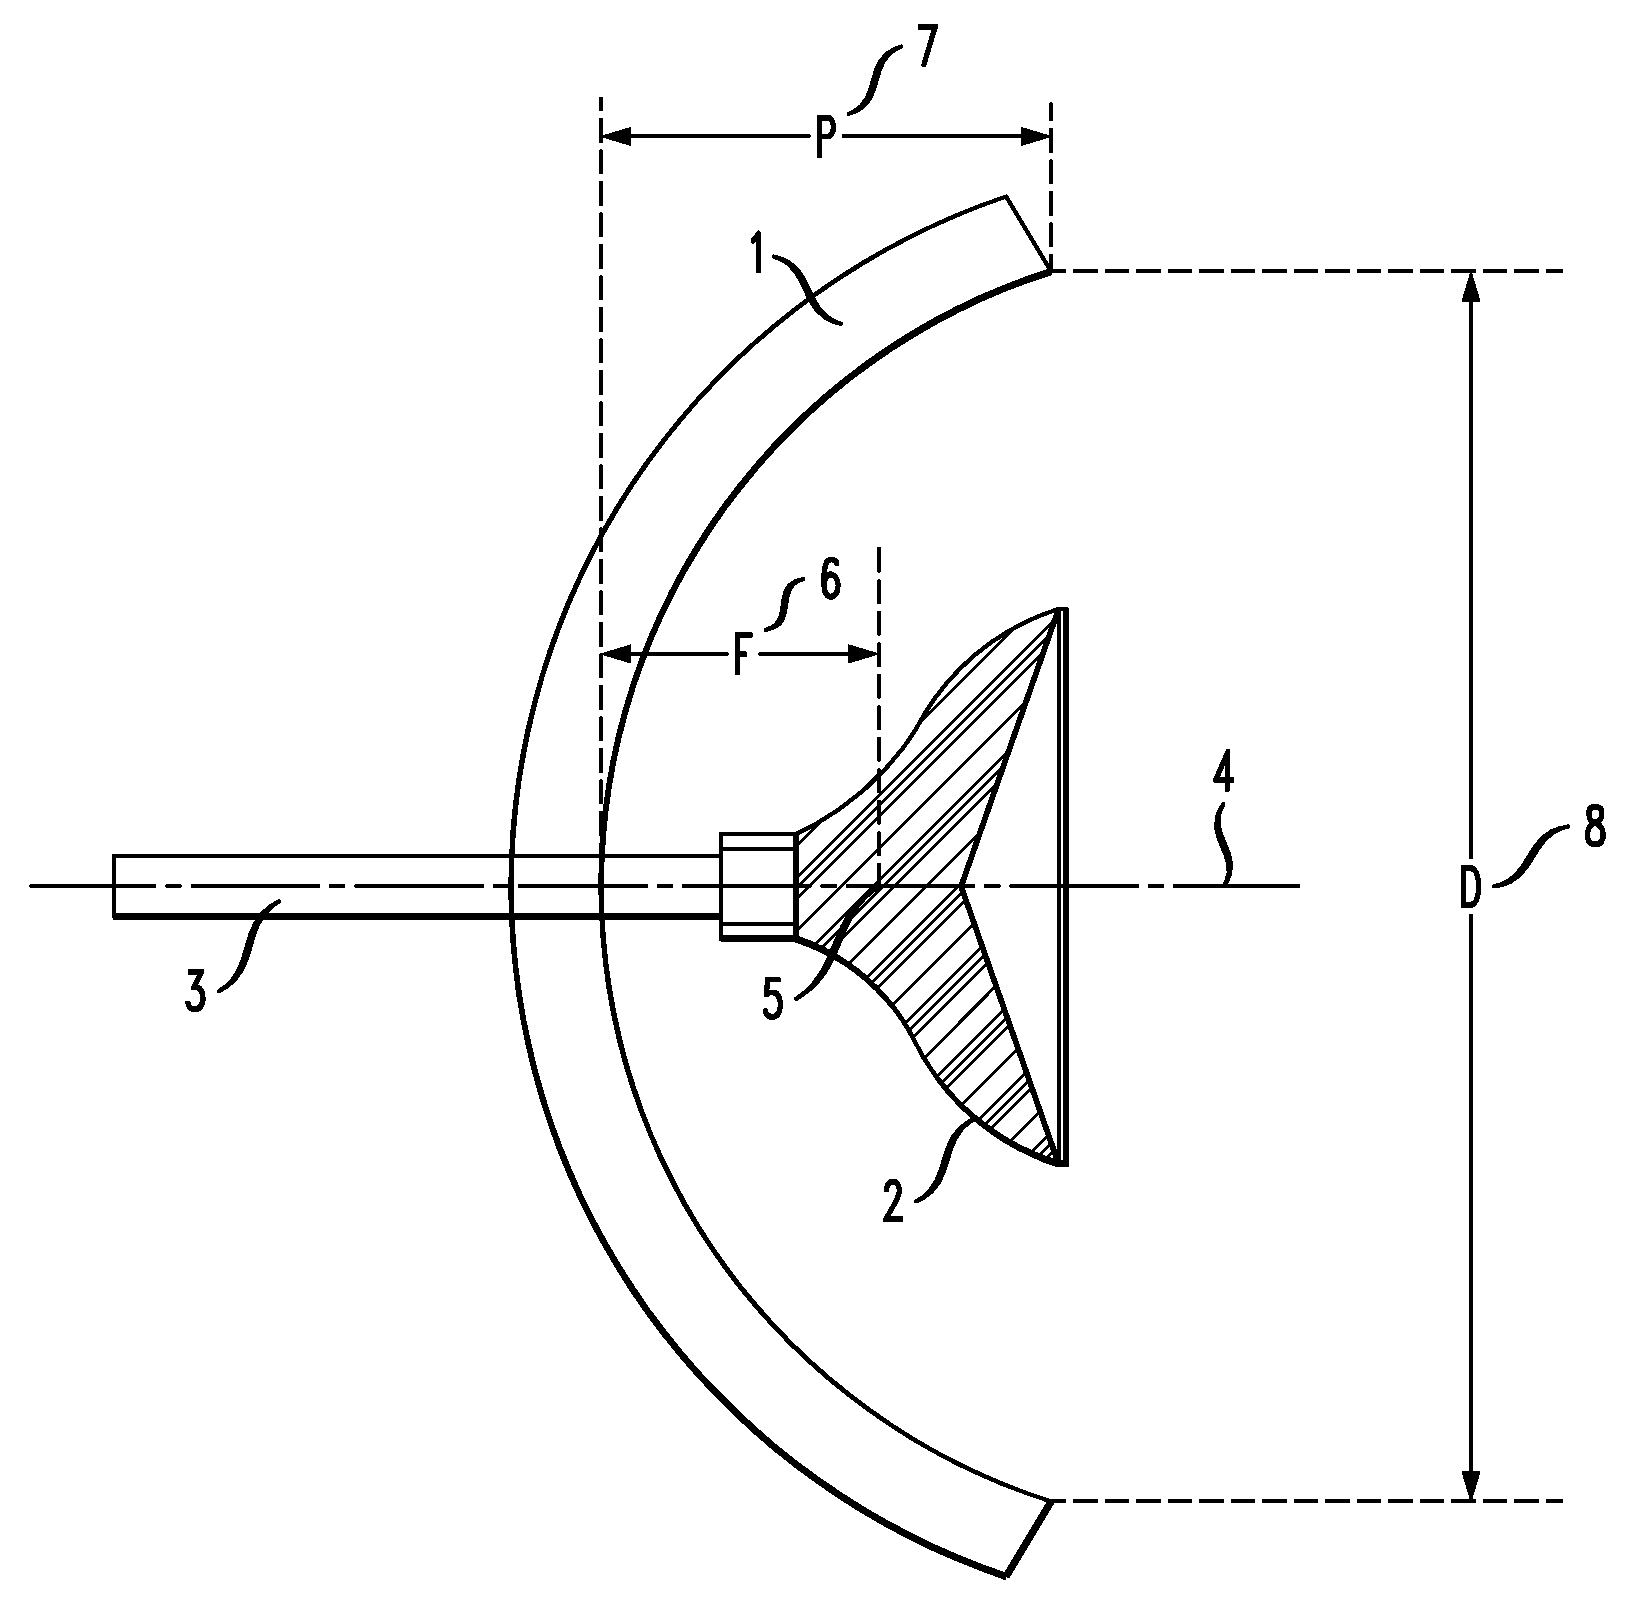 Sub-reflector of a dual-reflector antenna